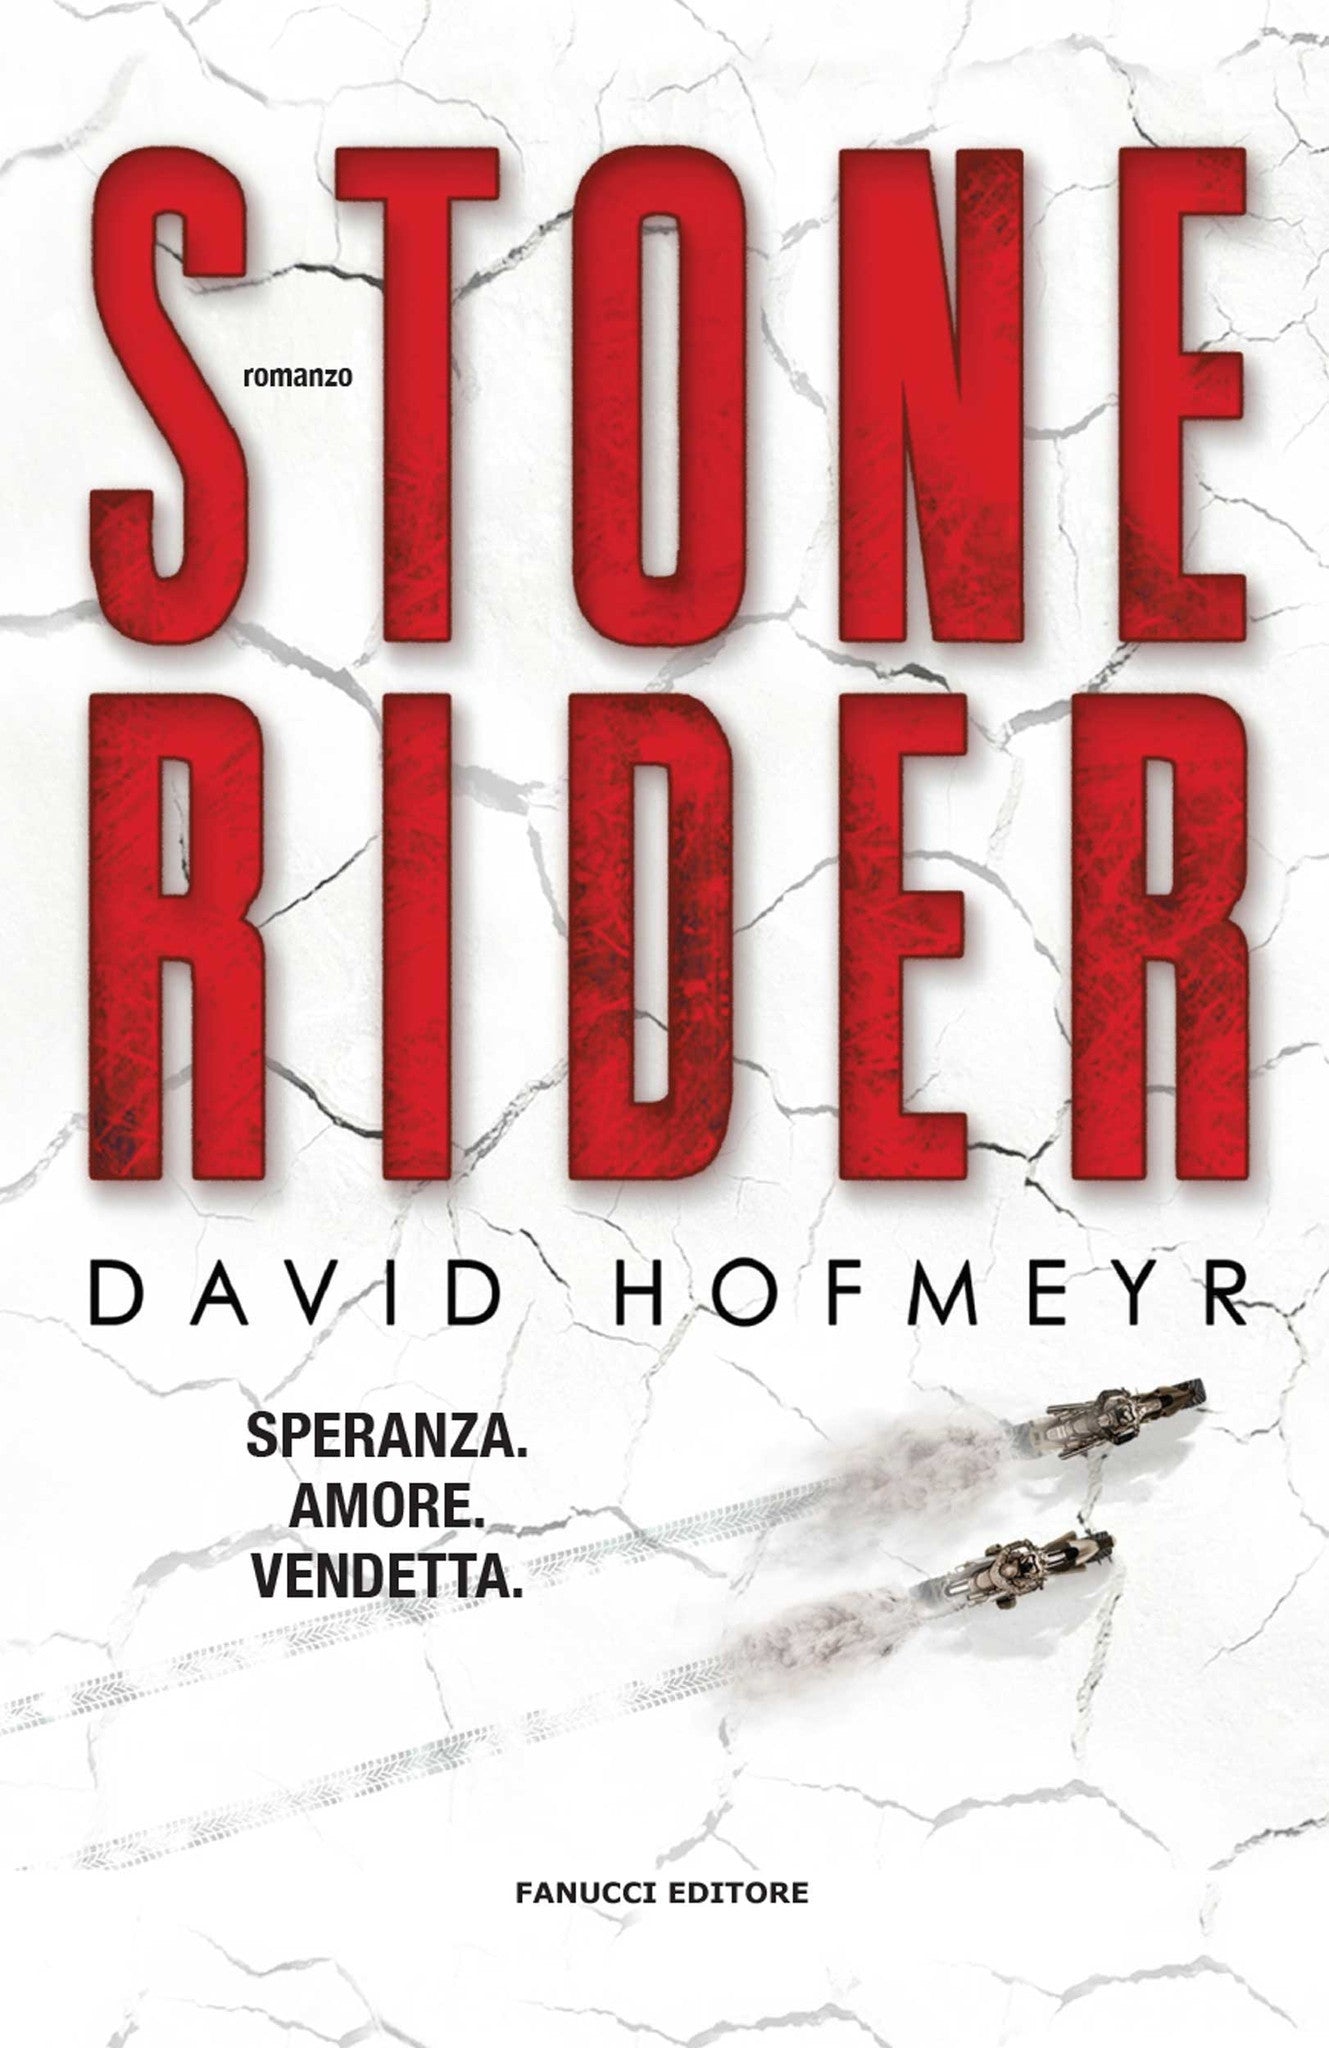 Stone rider